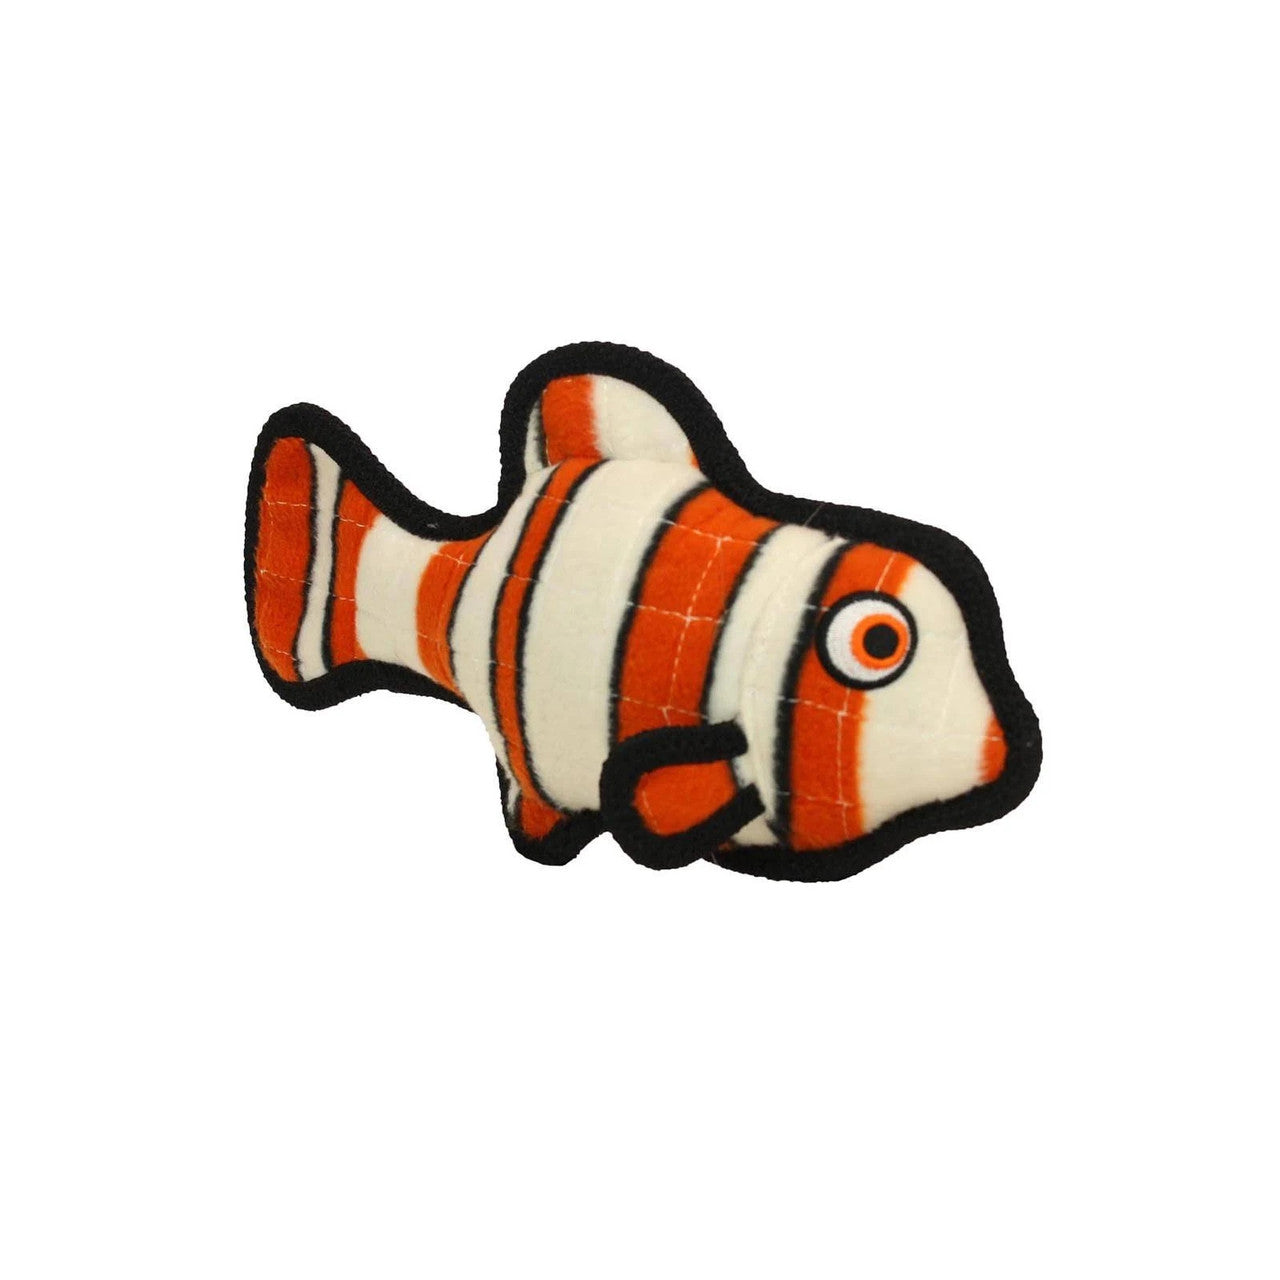 Tuffy Ocn Crtre Jr fish Orng 180181908576